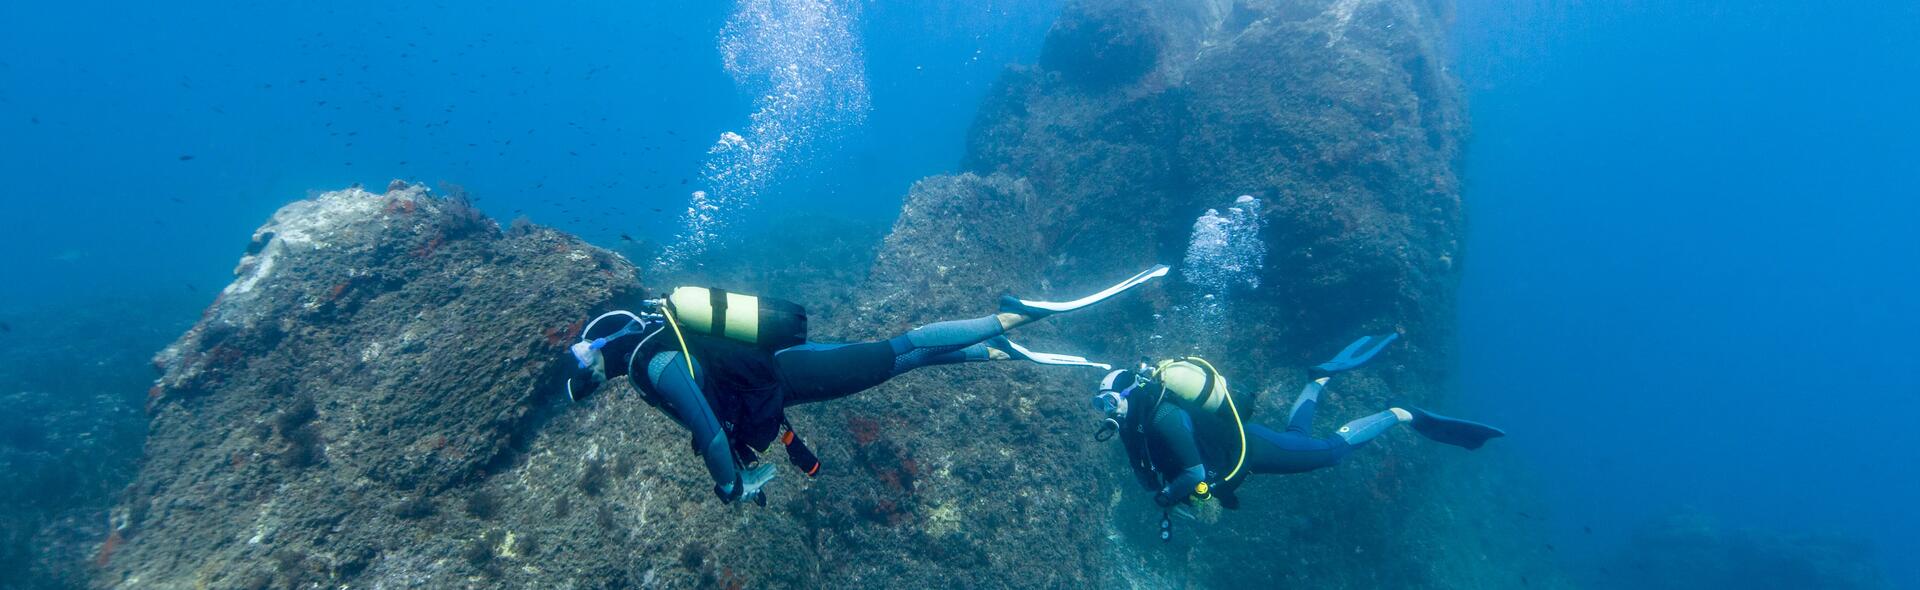 Decathlon / Scuba Diving Boots / Neoprene Diving Boots / 2 mm / Subea